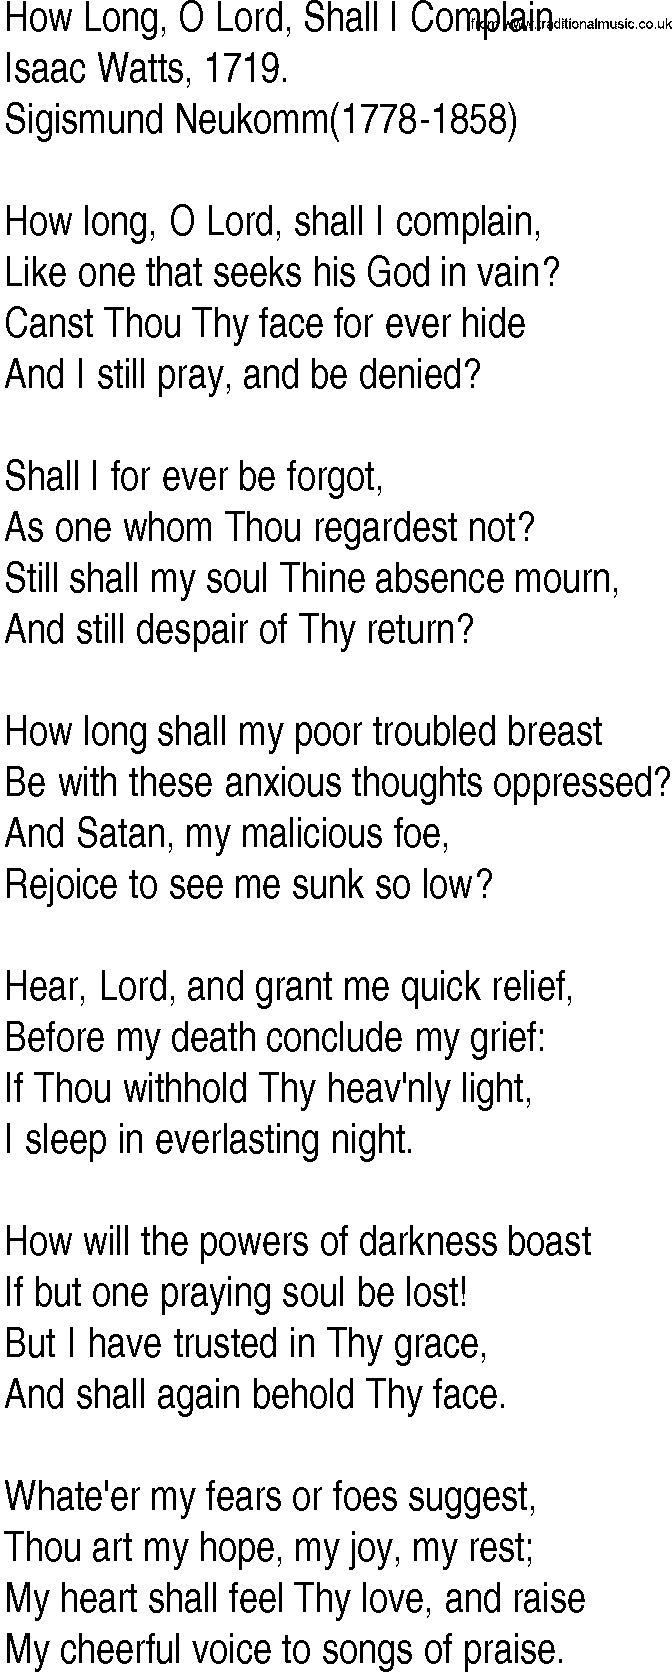 Hymn and Gospel Song: How Long, O Lord, Shall I Complain by Isaac Watts lyrics